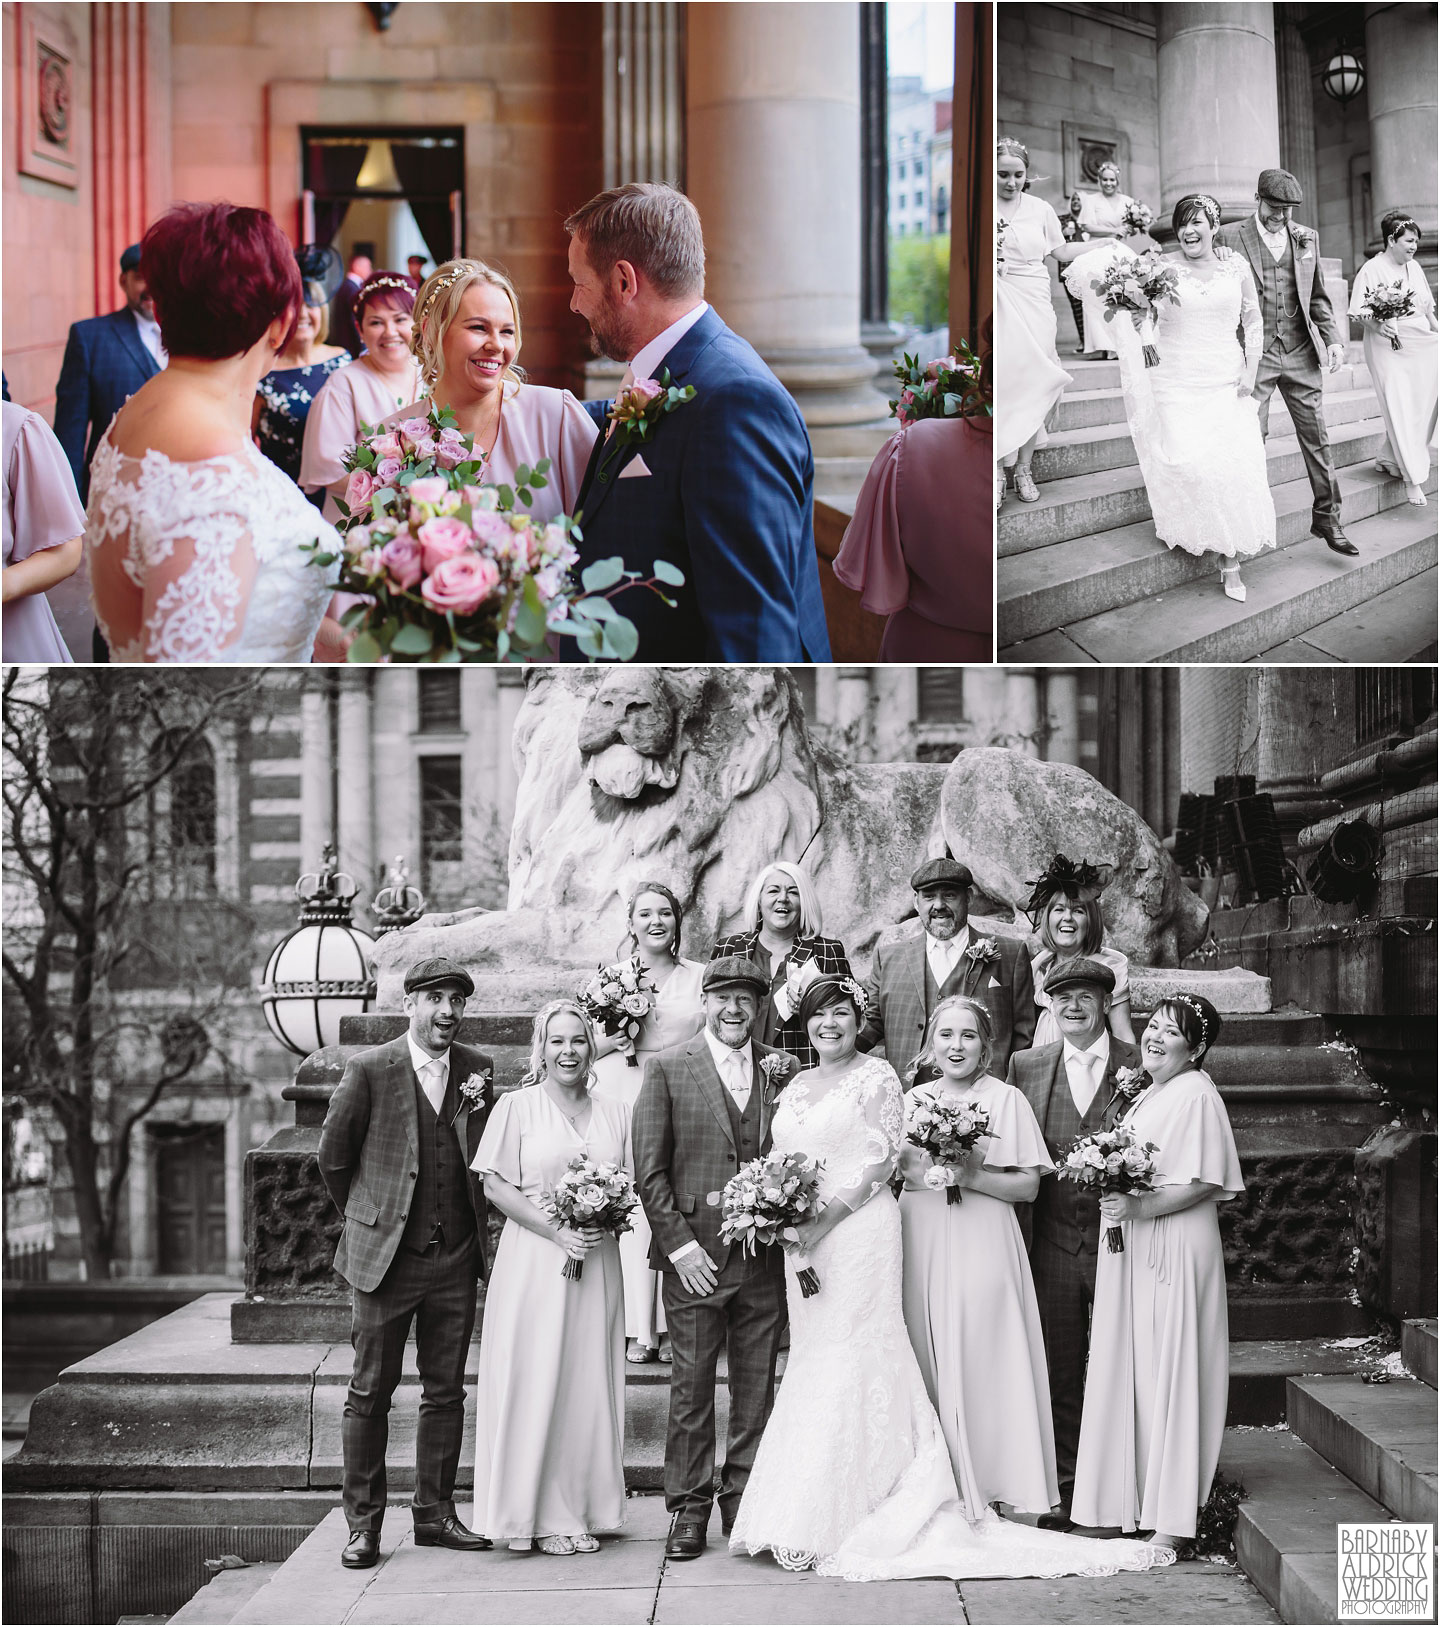 Leeds Town Hall wedding photos, Small Civil Ceremony at Leeds Town Hall, Leeds city centre wedding photos